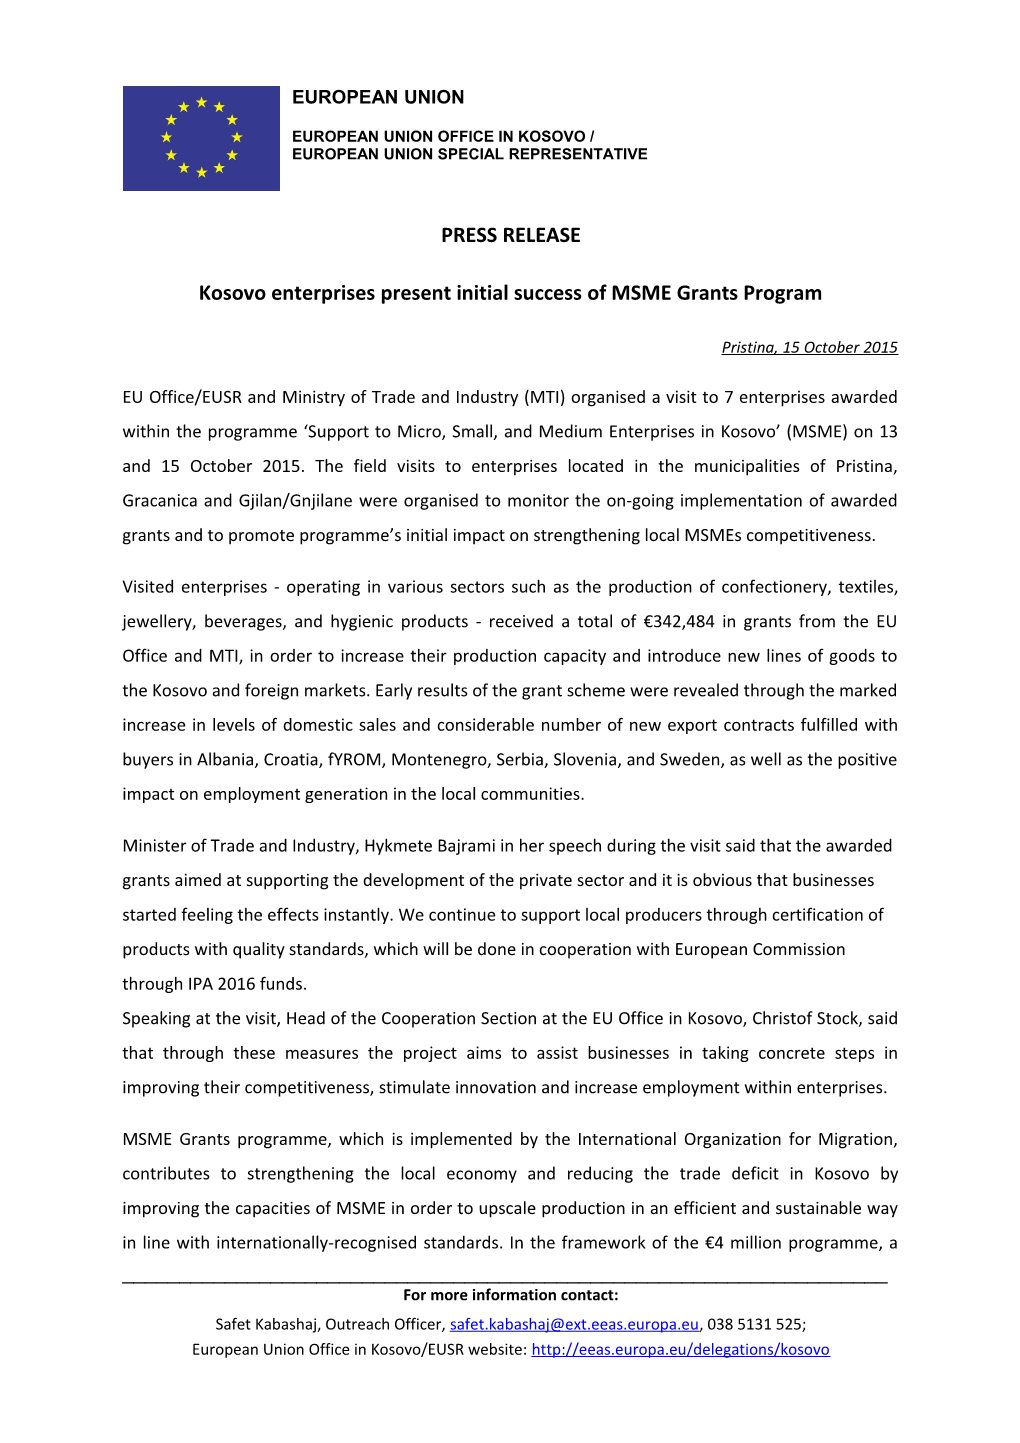 Kosovo Enterprises Present Initial Success of MSME Grants Program